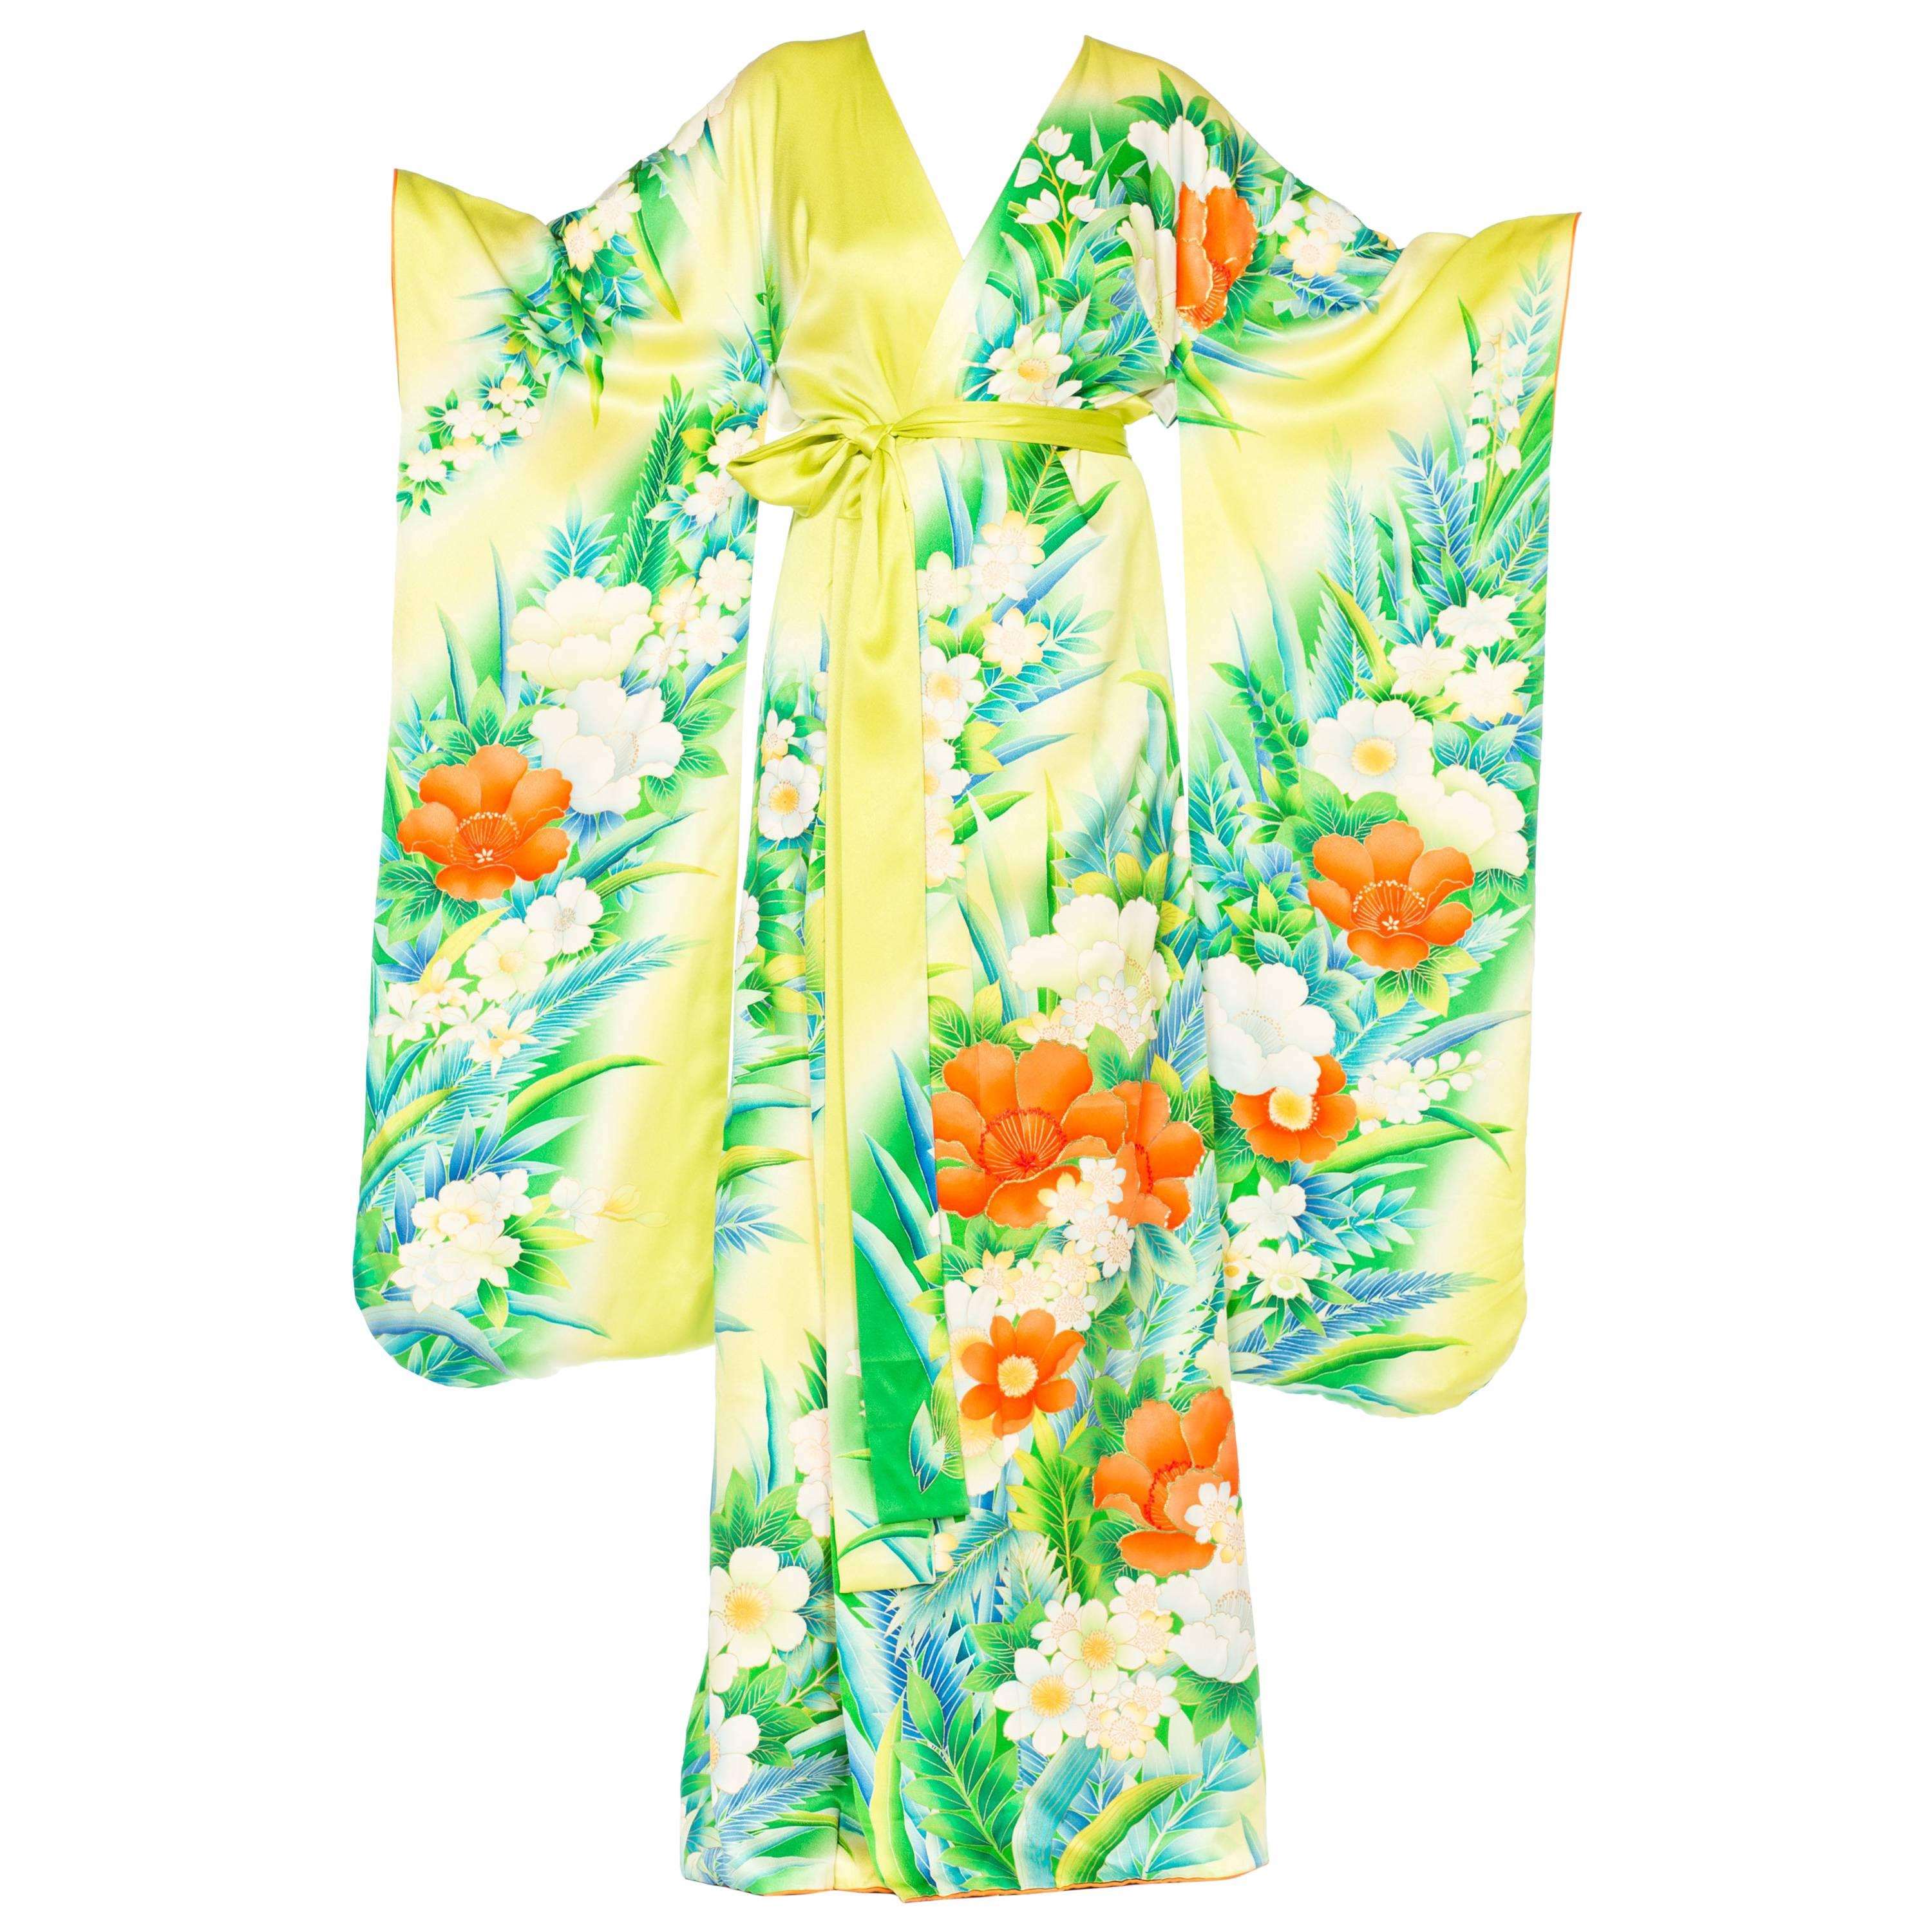 Morphew Collection Tropical Hand Painted Japanese Kimono Dress